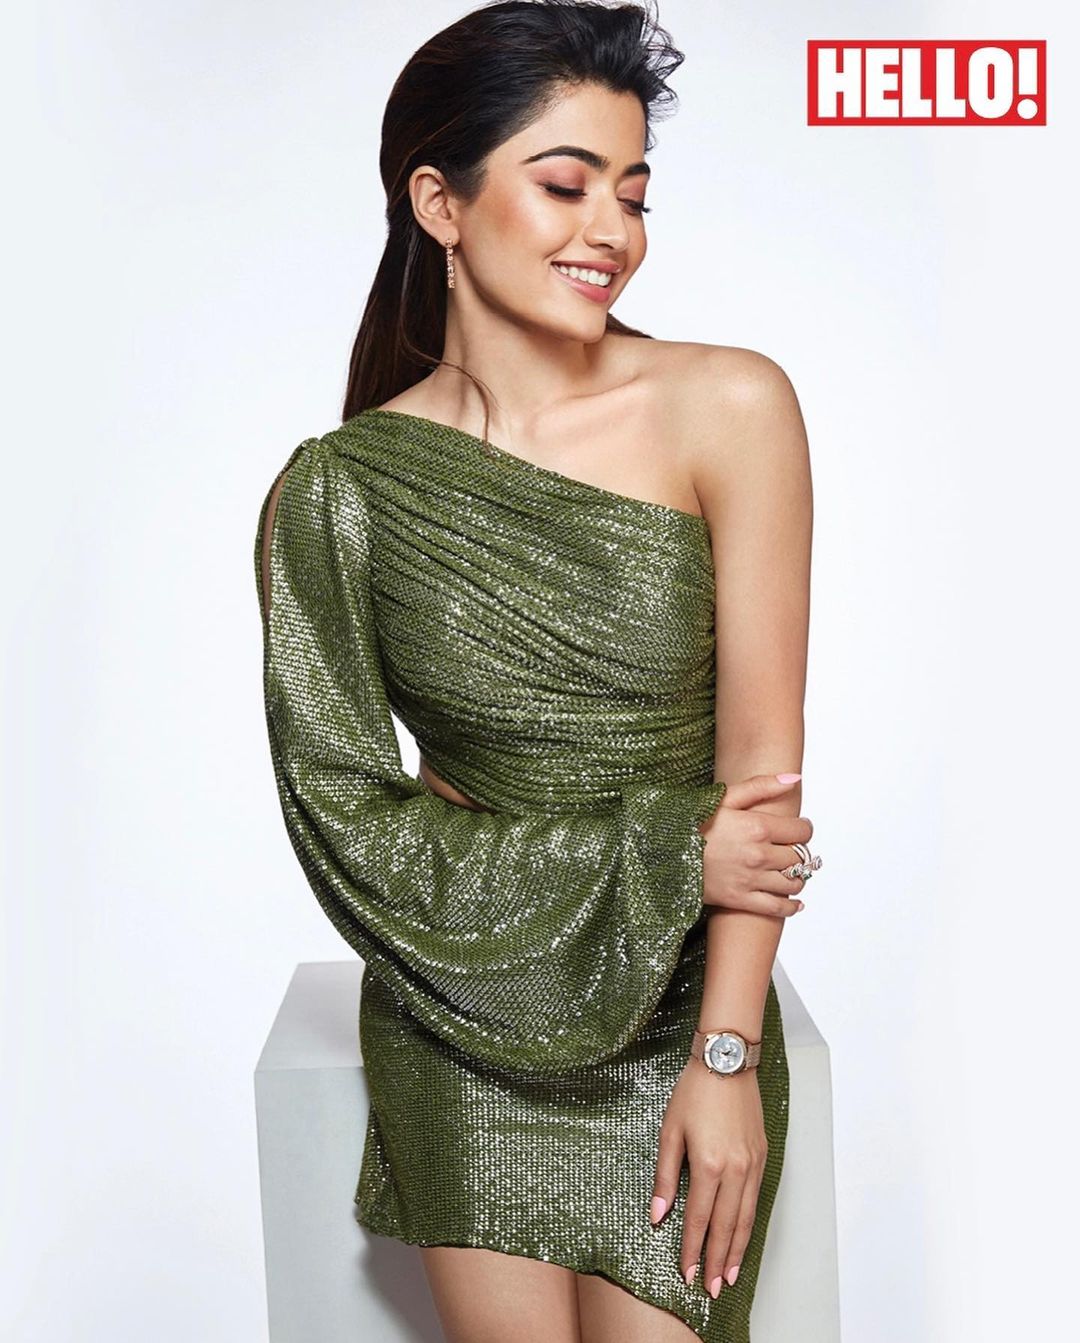 Rashmika Mandanna looks stylish in the one-shoulder dress